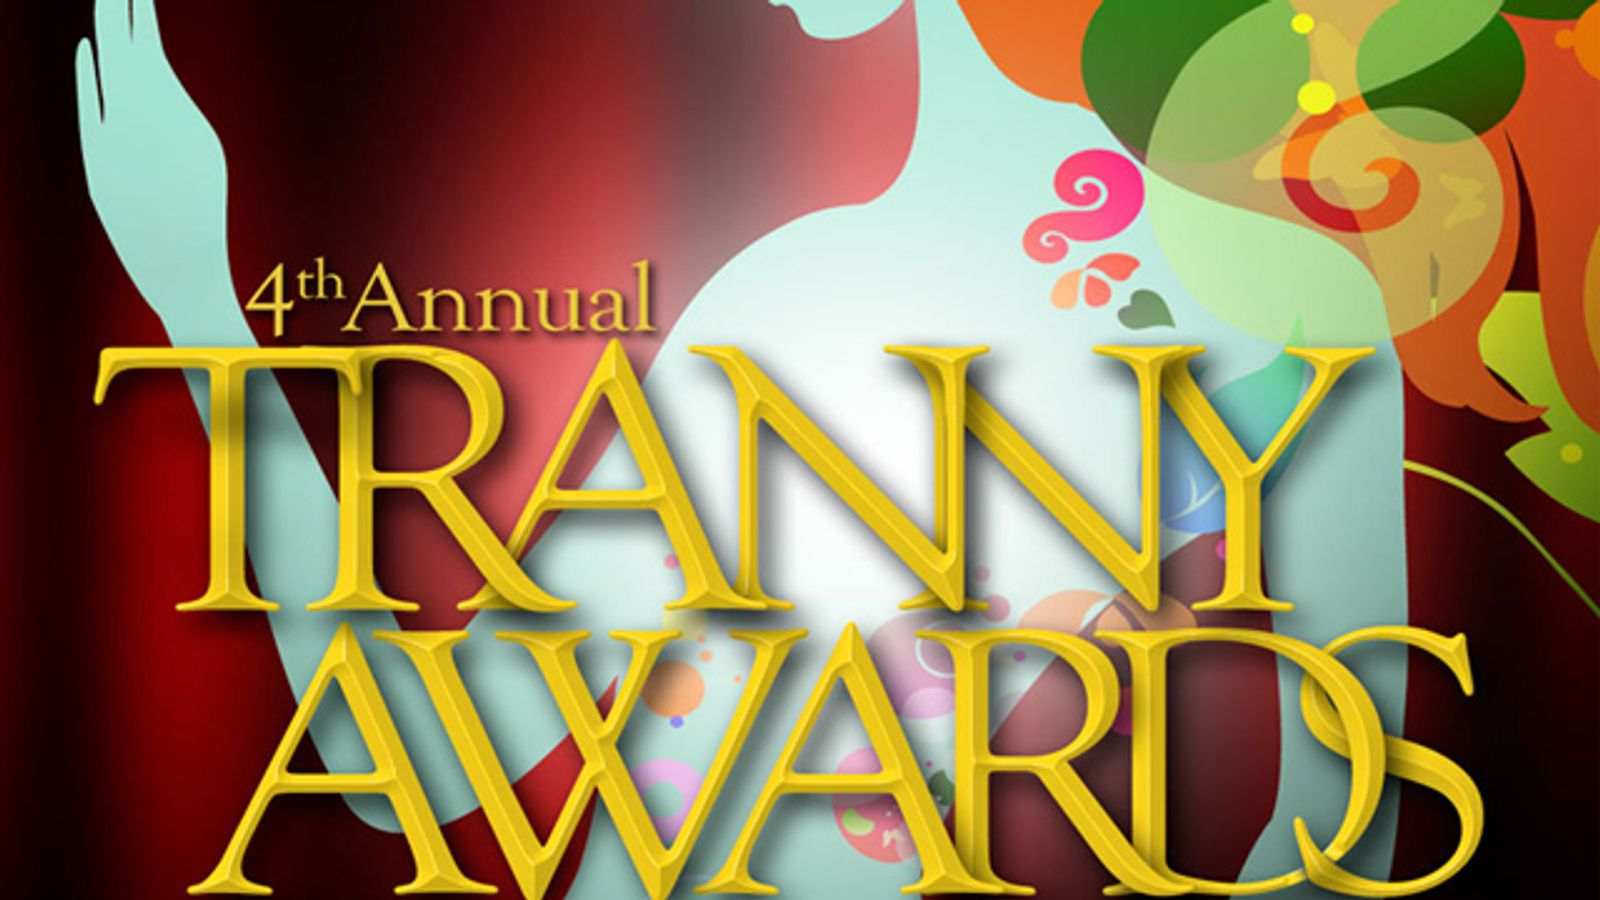 Tranny Awards Nominations Announced